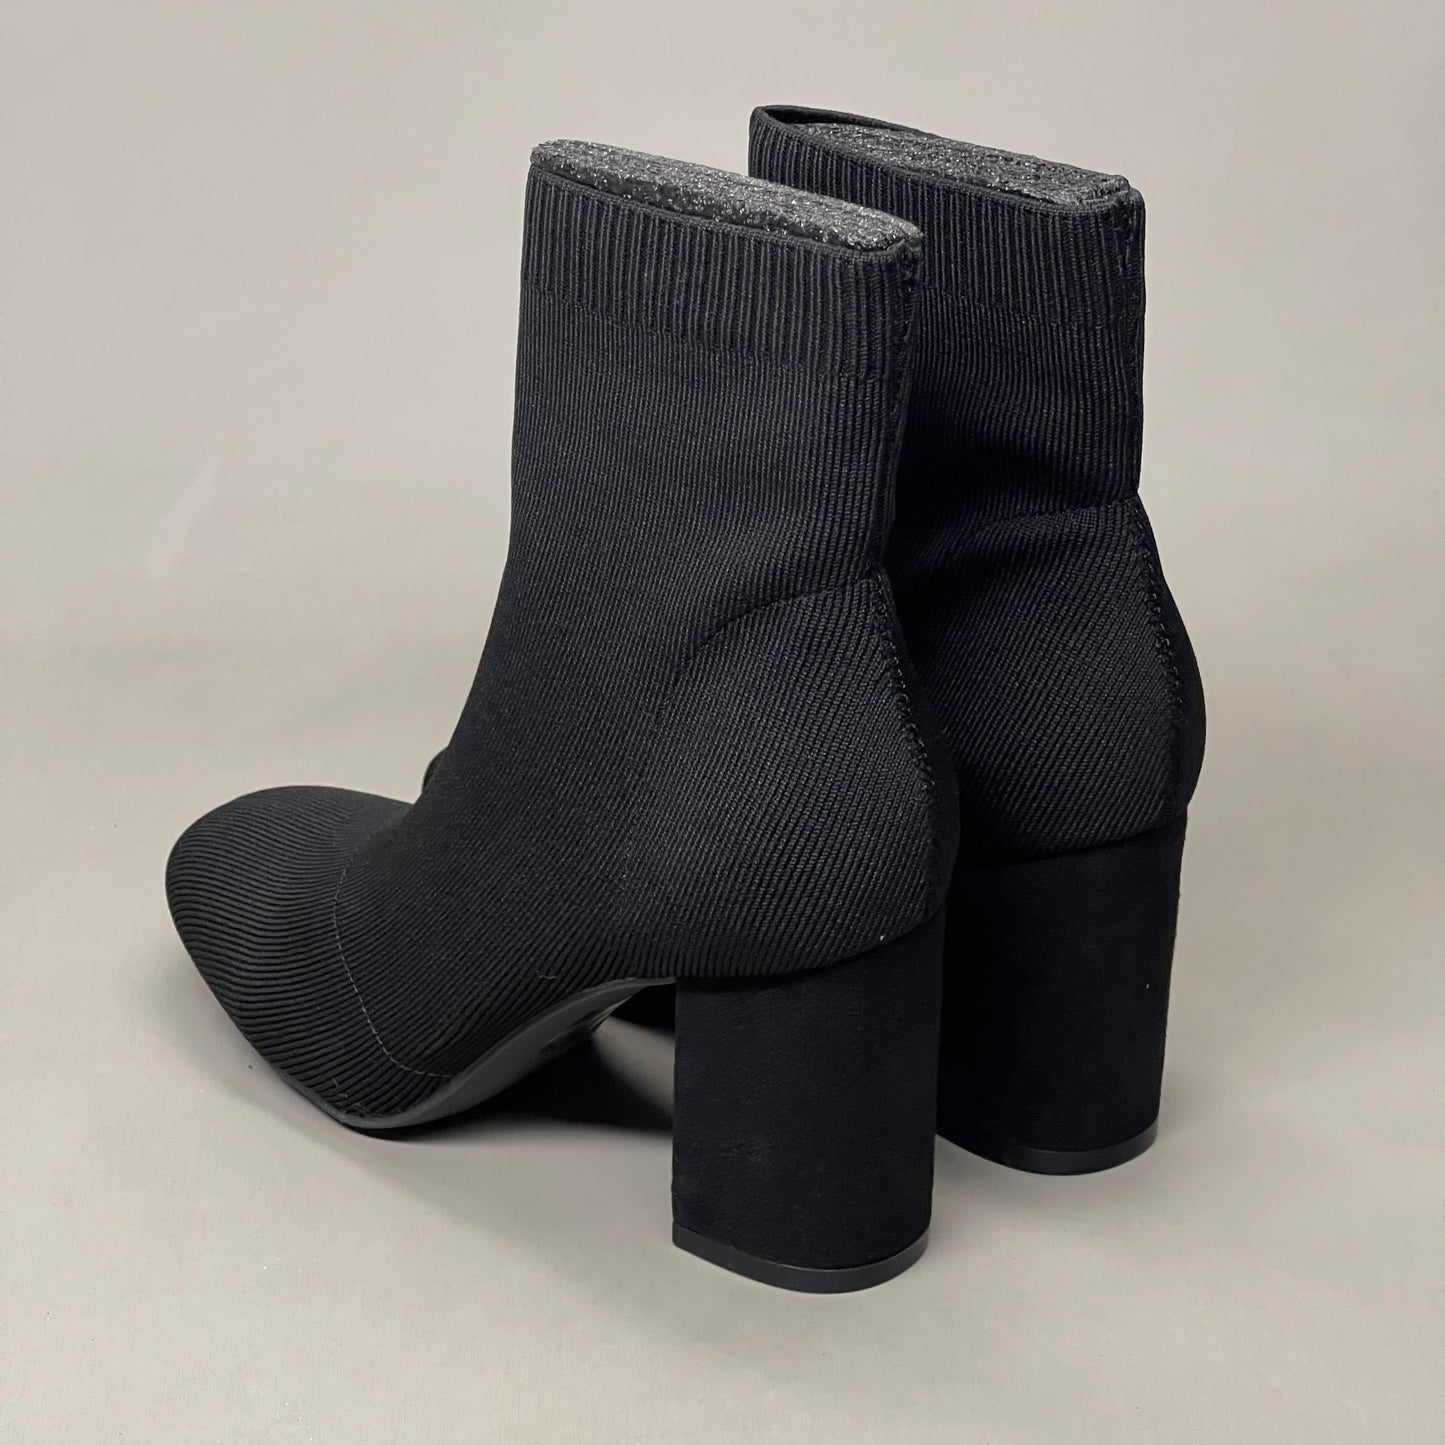 MIA Erika Fly Knit Booties Dress Boots Black 2” Heel Sz 9 GS7553115Y (New)